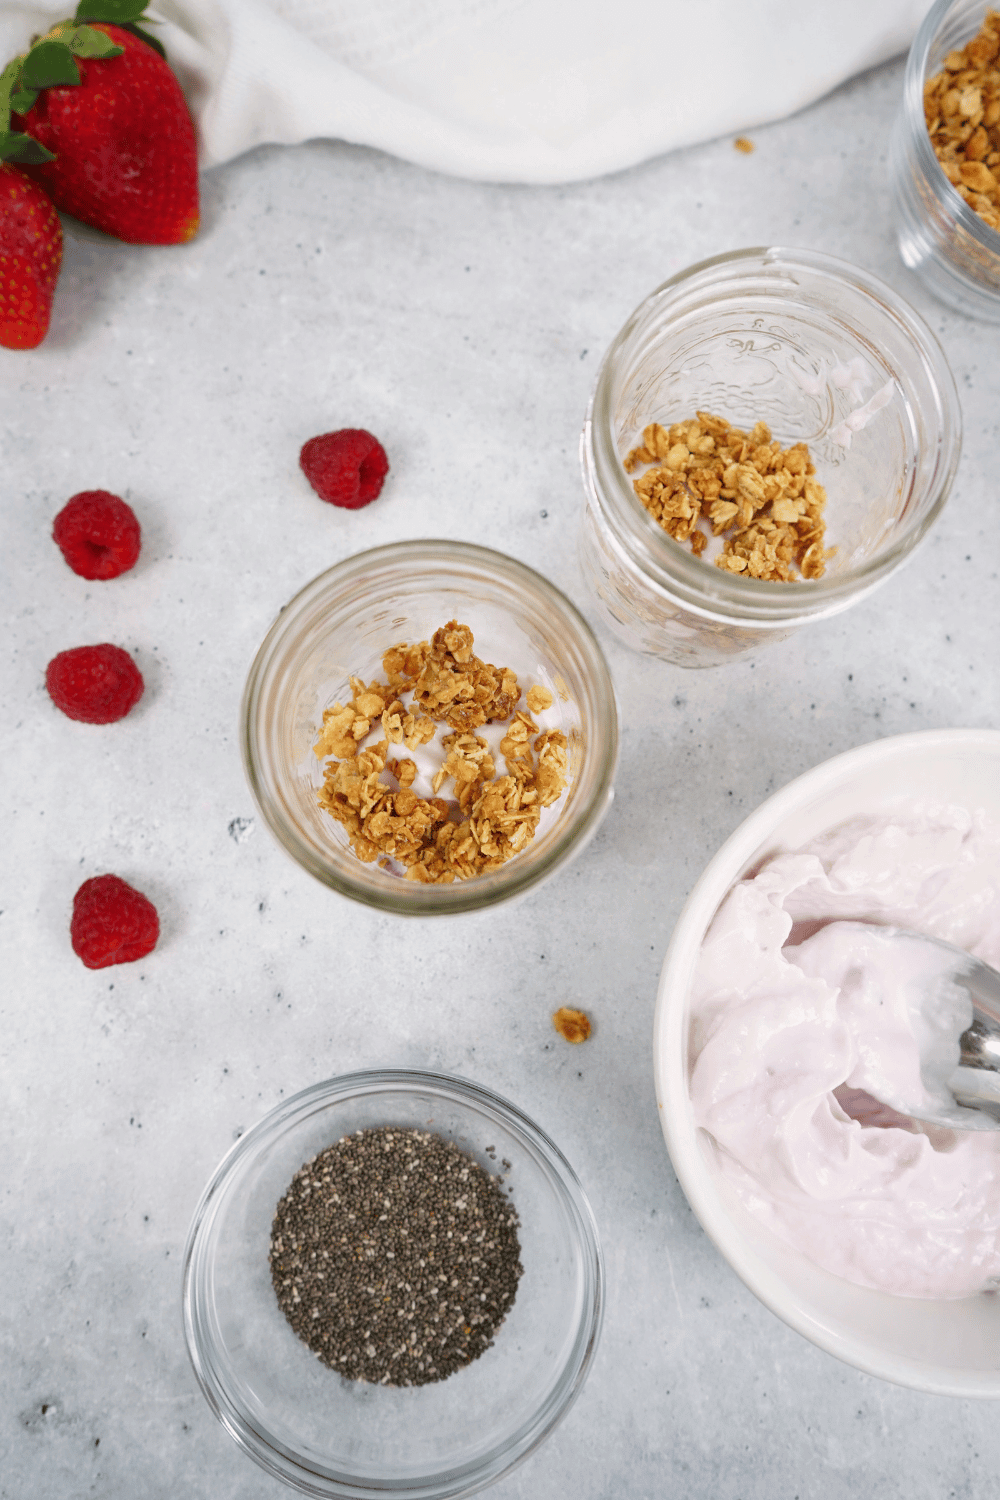 healthy yogurt parfait with granola and berries